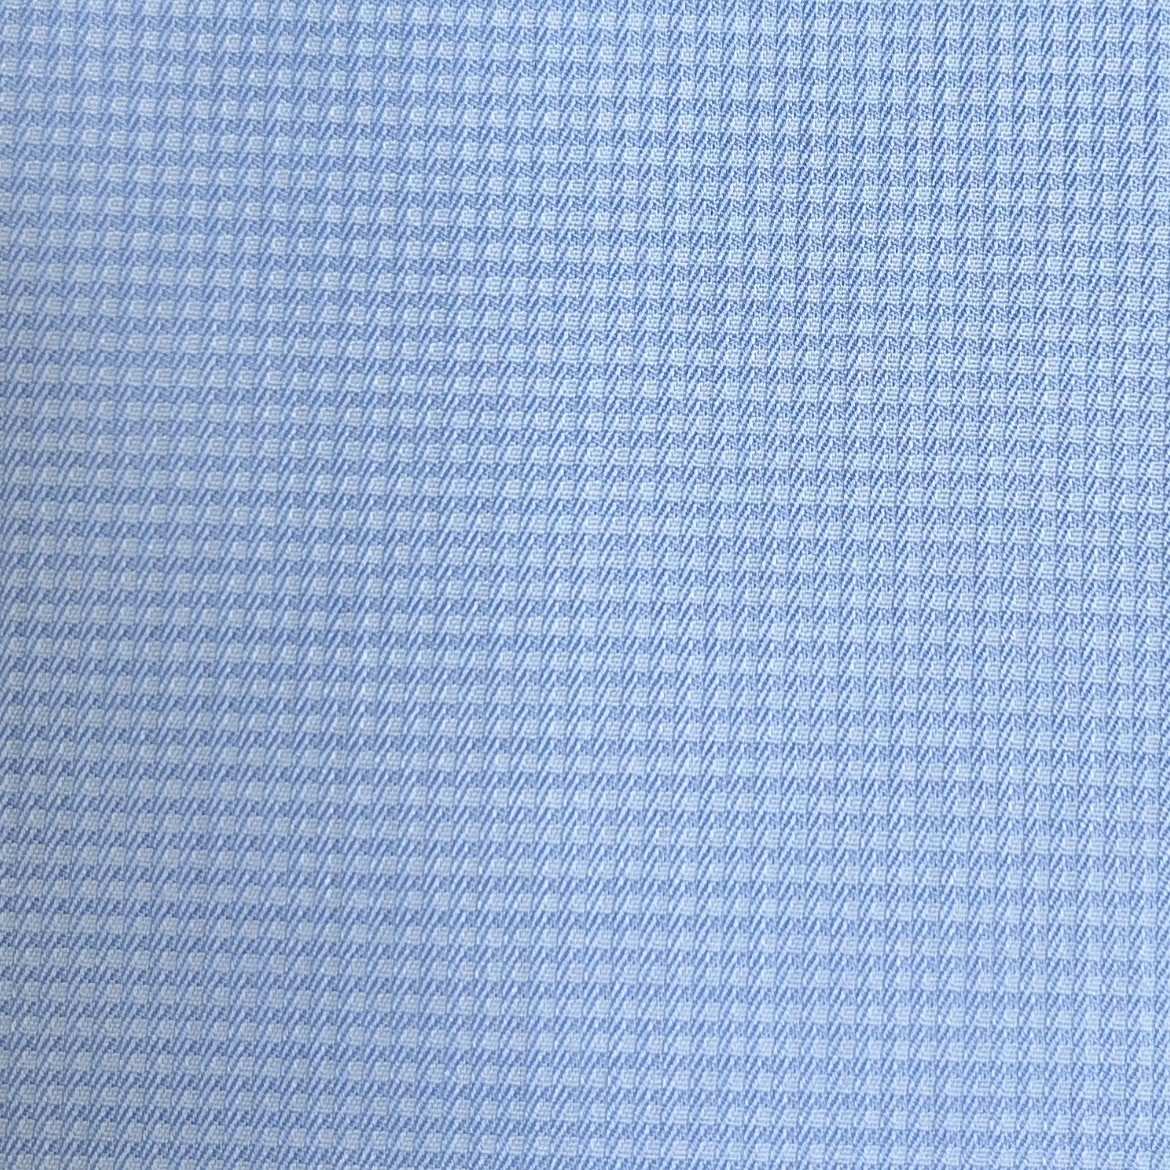 Camisa Sob Medida Xadrez Azul e Branca - Foto 1